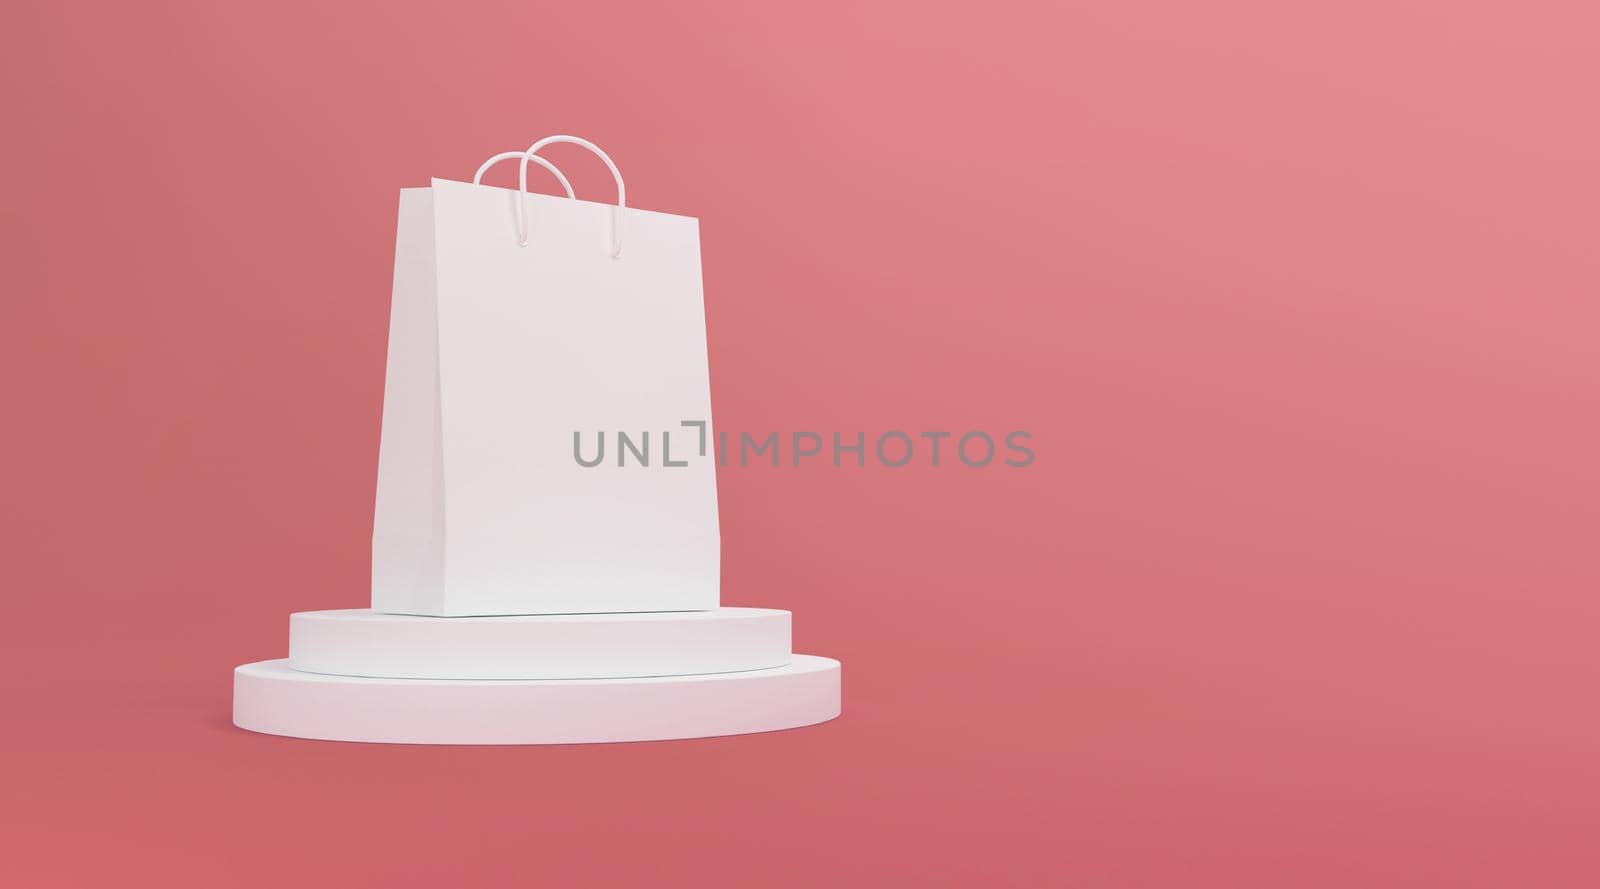 Shopping bag on platform exhibition in pink studio background. 3d rendering.